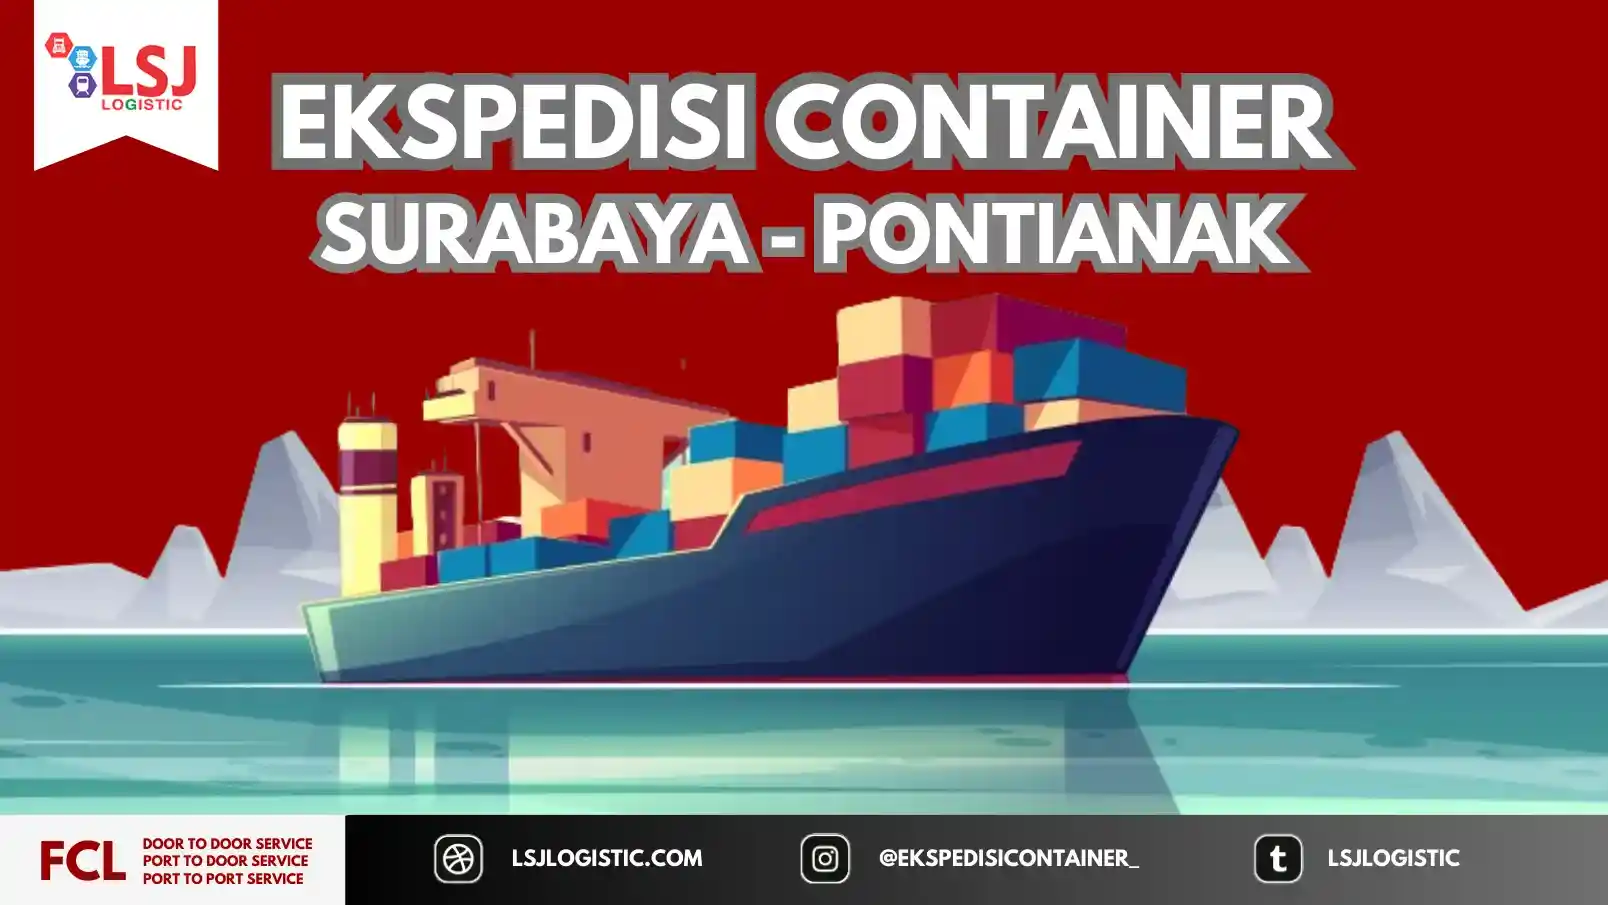 Tarif Pengiriman Container Surabaya Pontianak